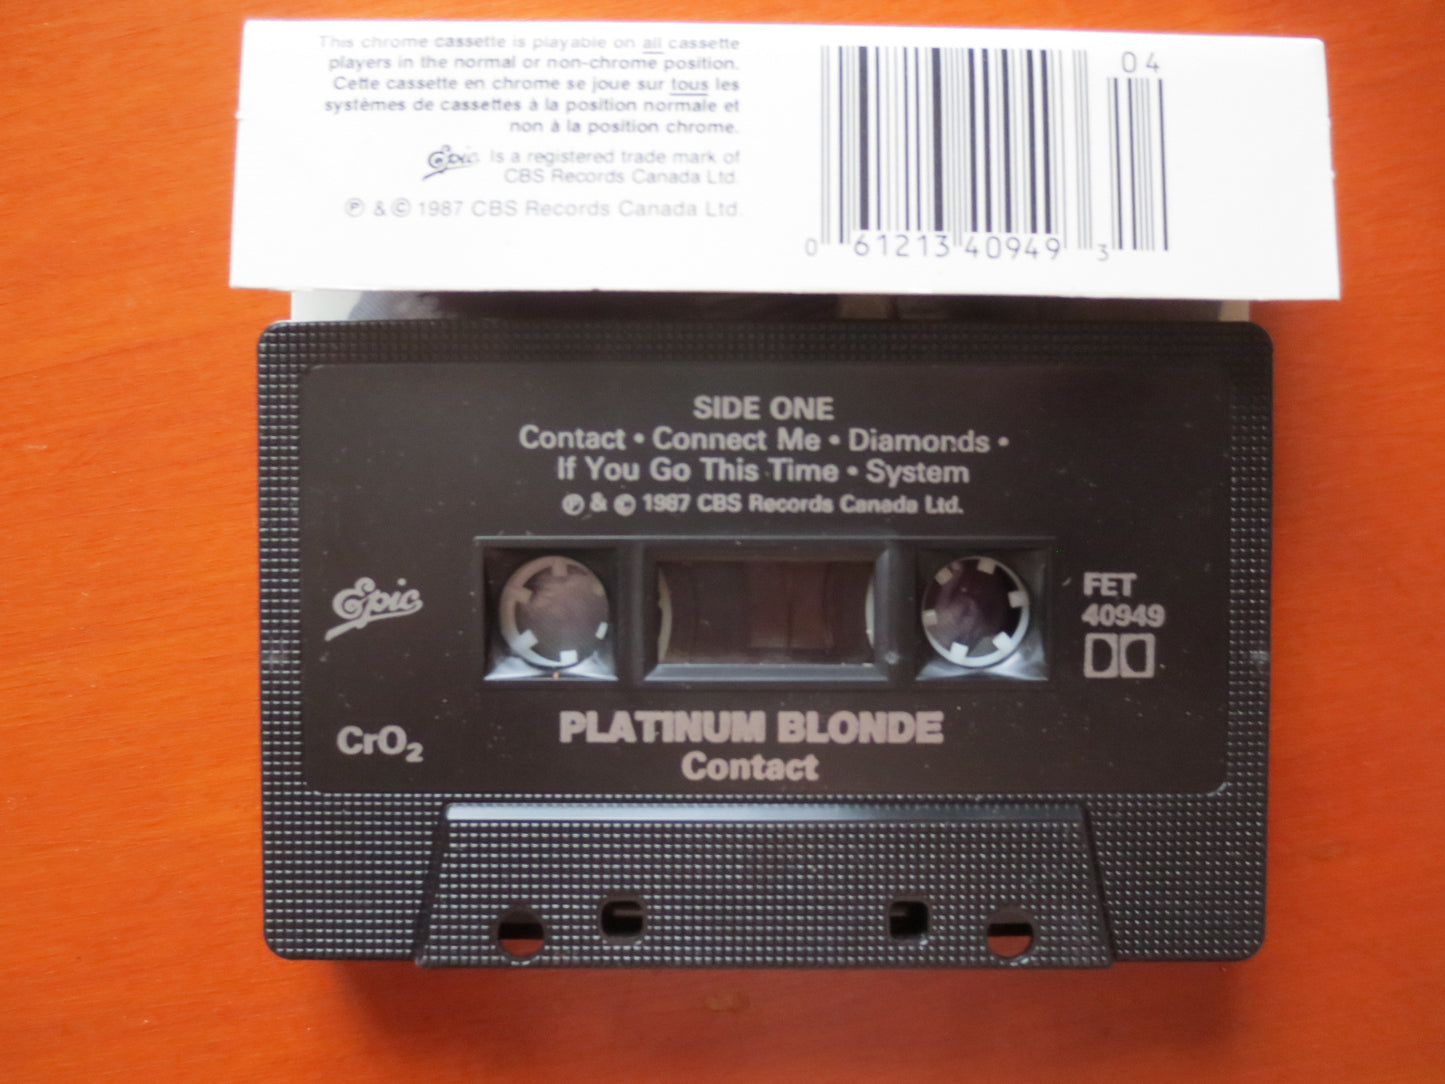 PLATINUM BLONDE Tape, CONTACT Tape, Platinum Blonde Lp, Rock Music, Rock Song, Tape Cassette, Rock Cassette, 1987 Cassette